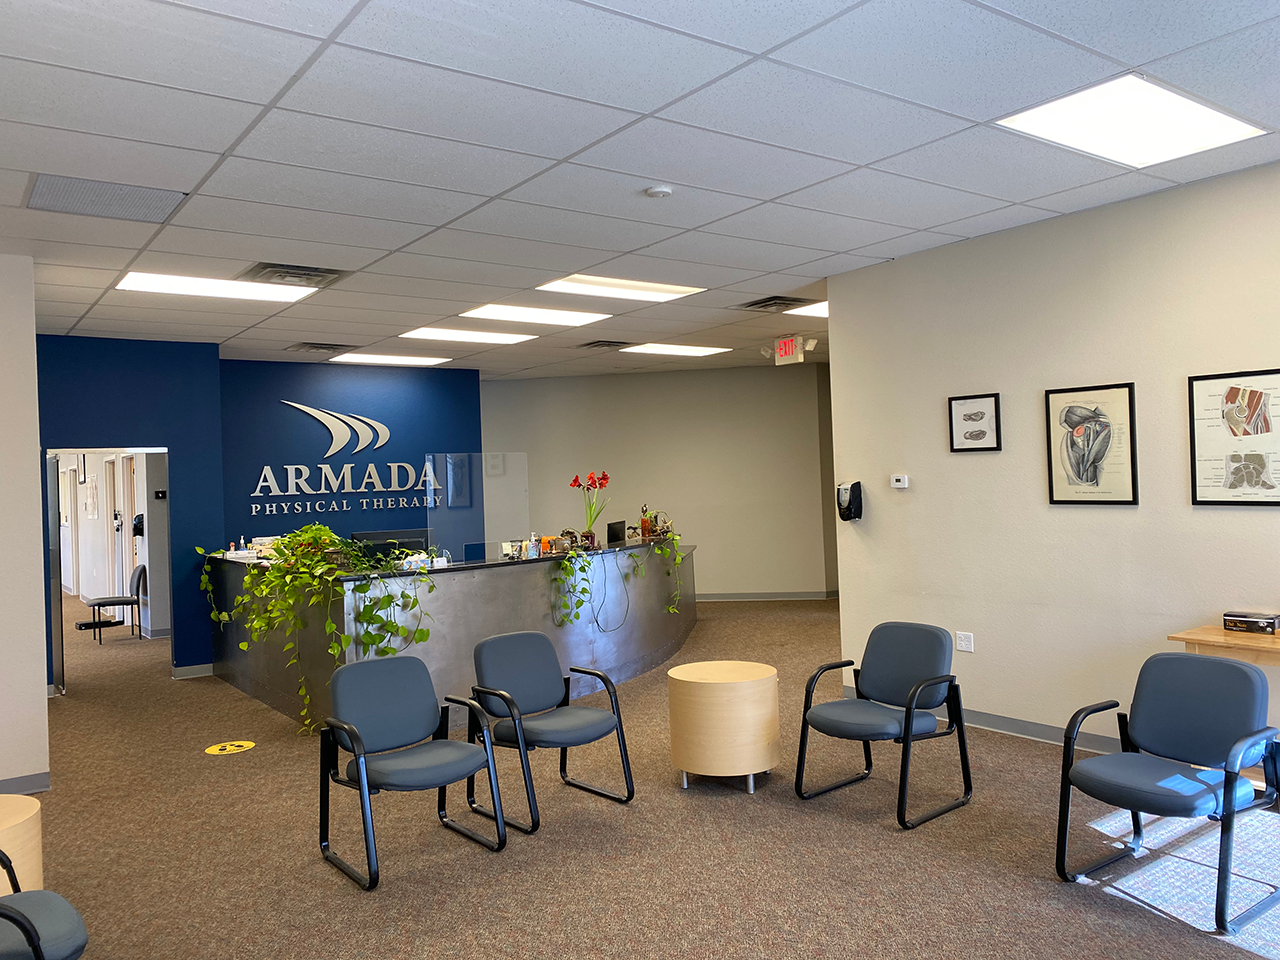 Armada Physical Therapy - Albuquerque, Jefferson
6400 Jefferson St NE
#102
Albuquerque, NM 87109